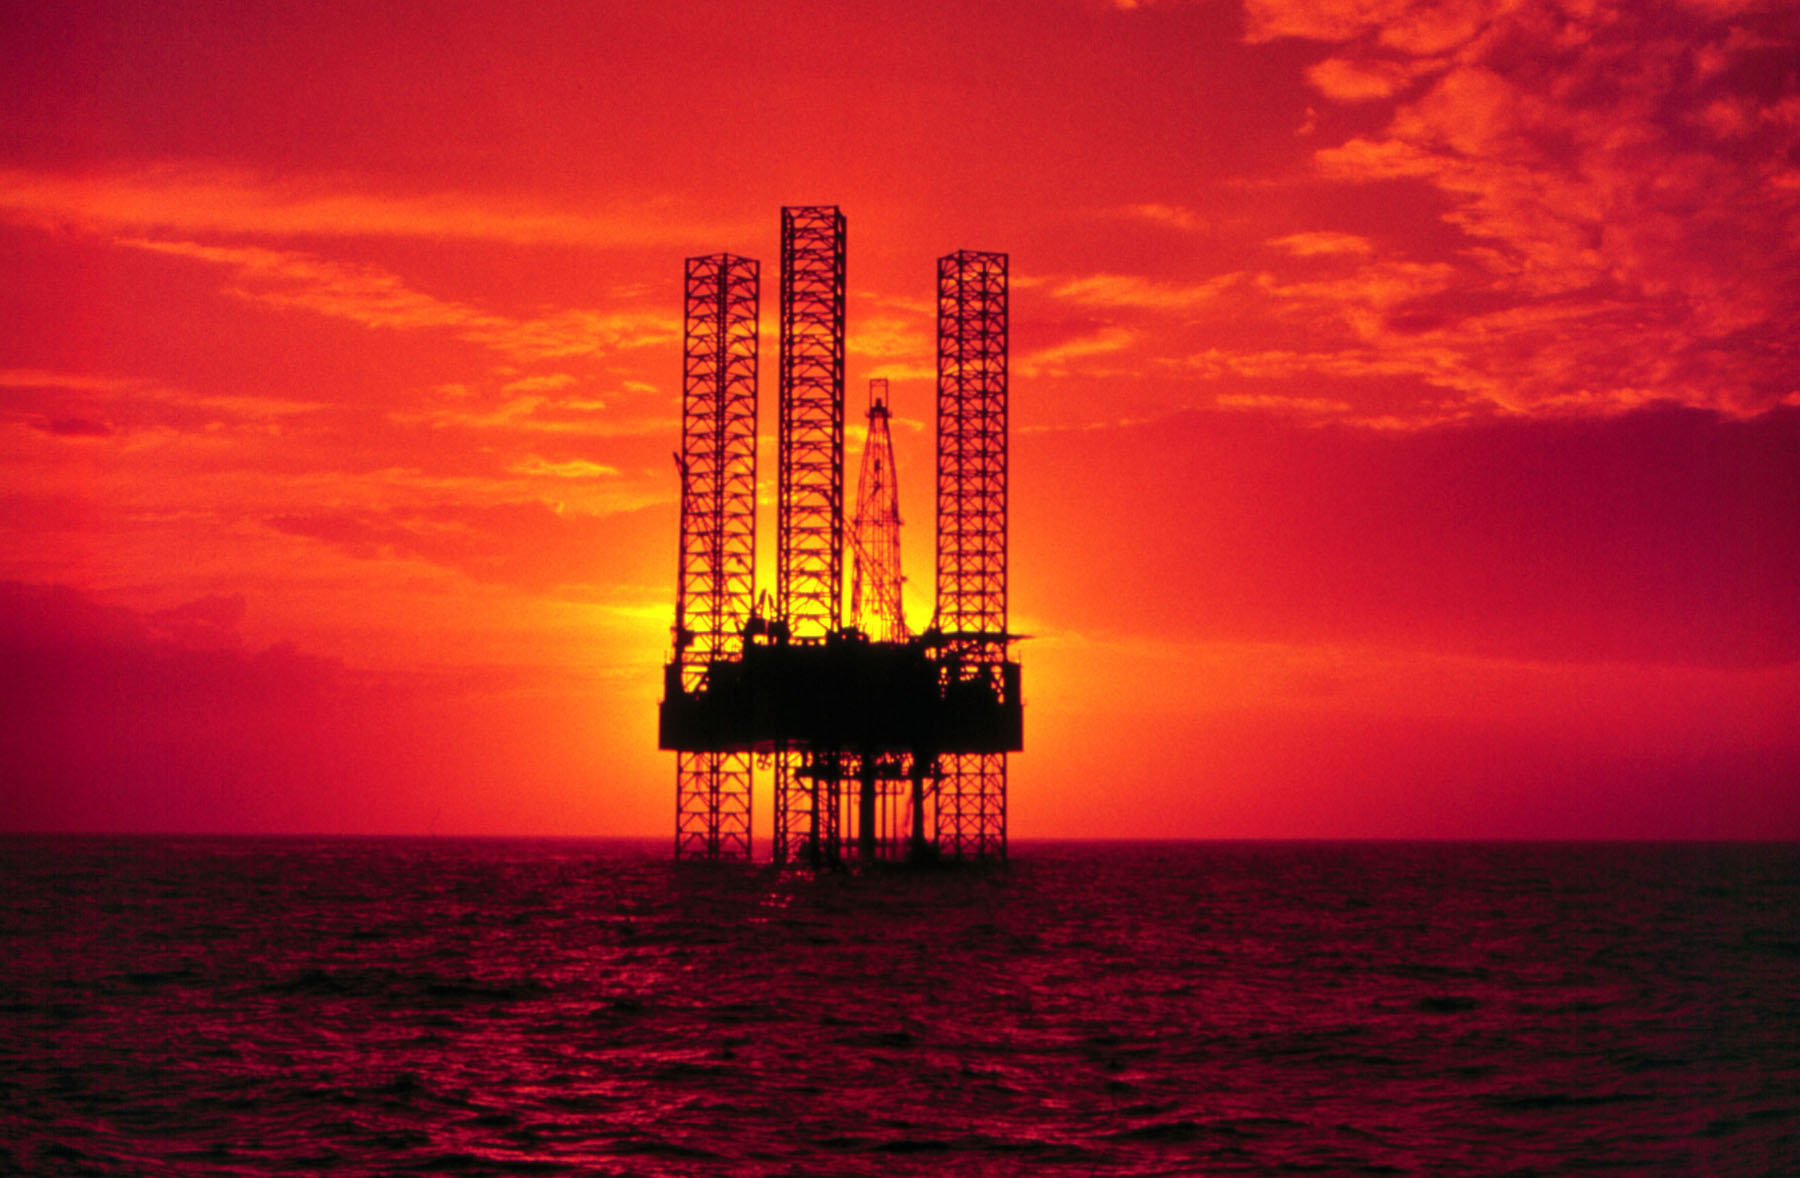 As oil prices tank, new era of abundance seen dawning